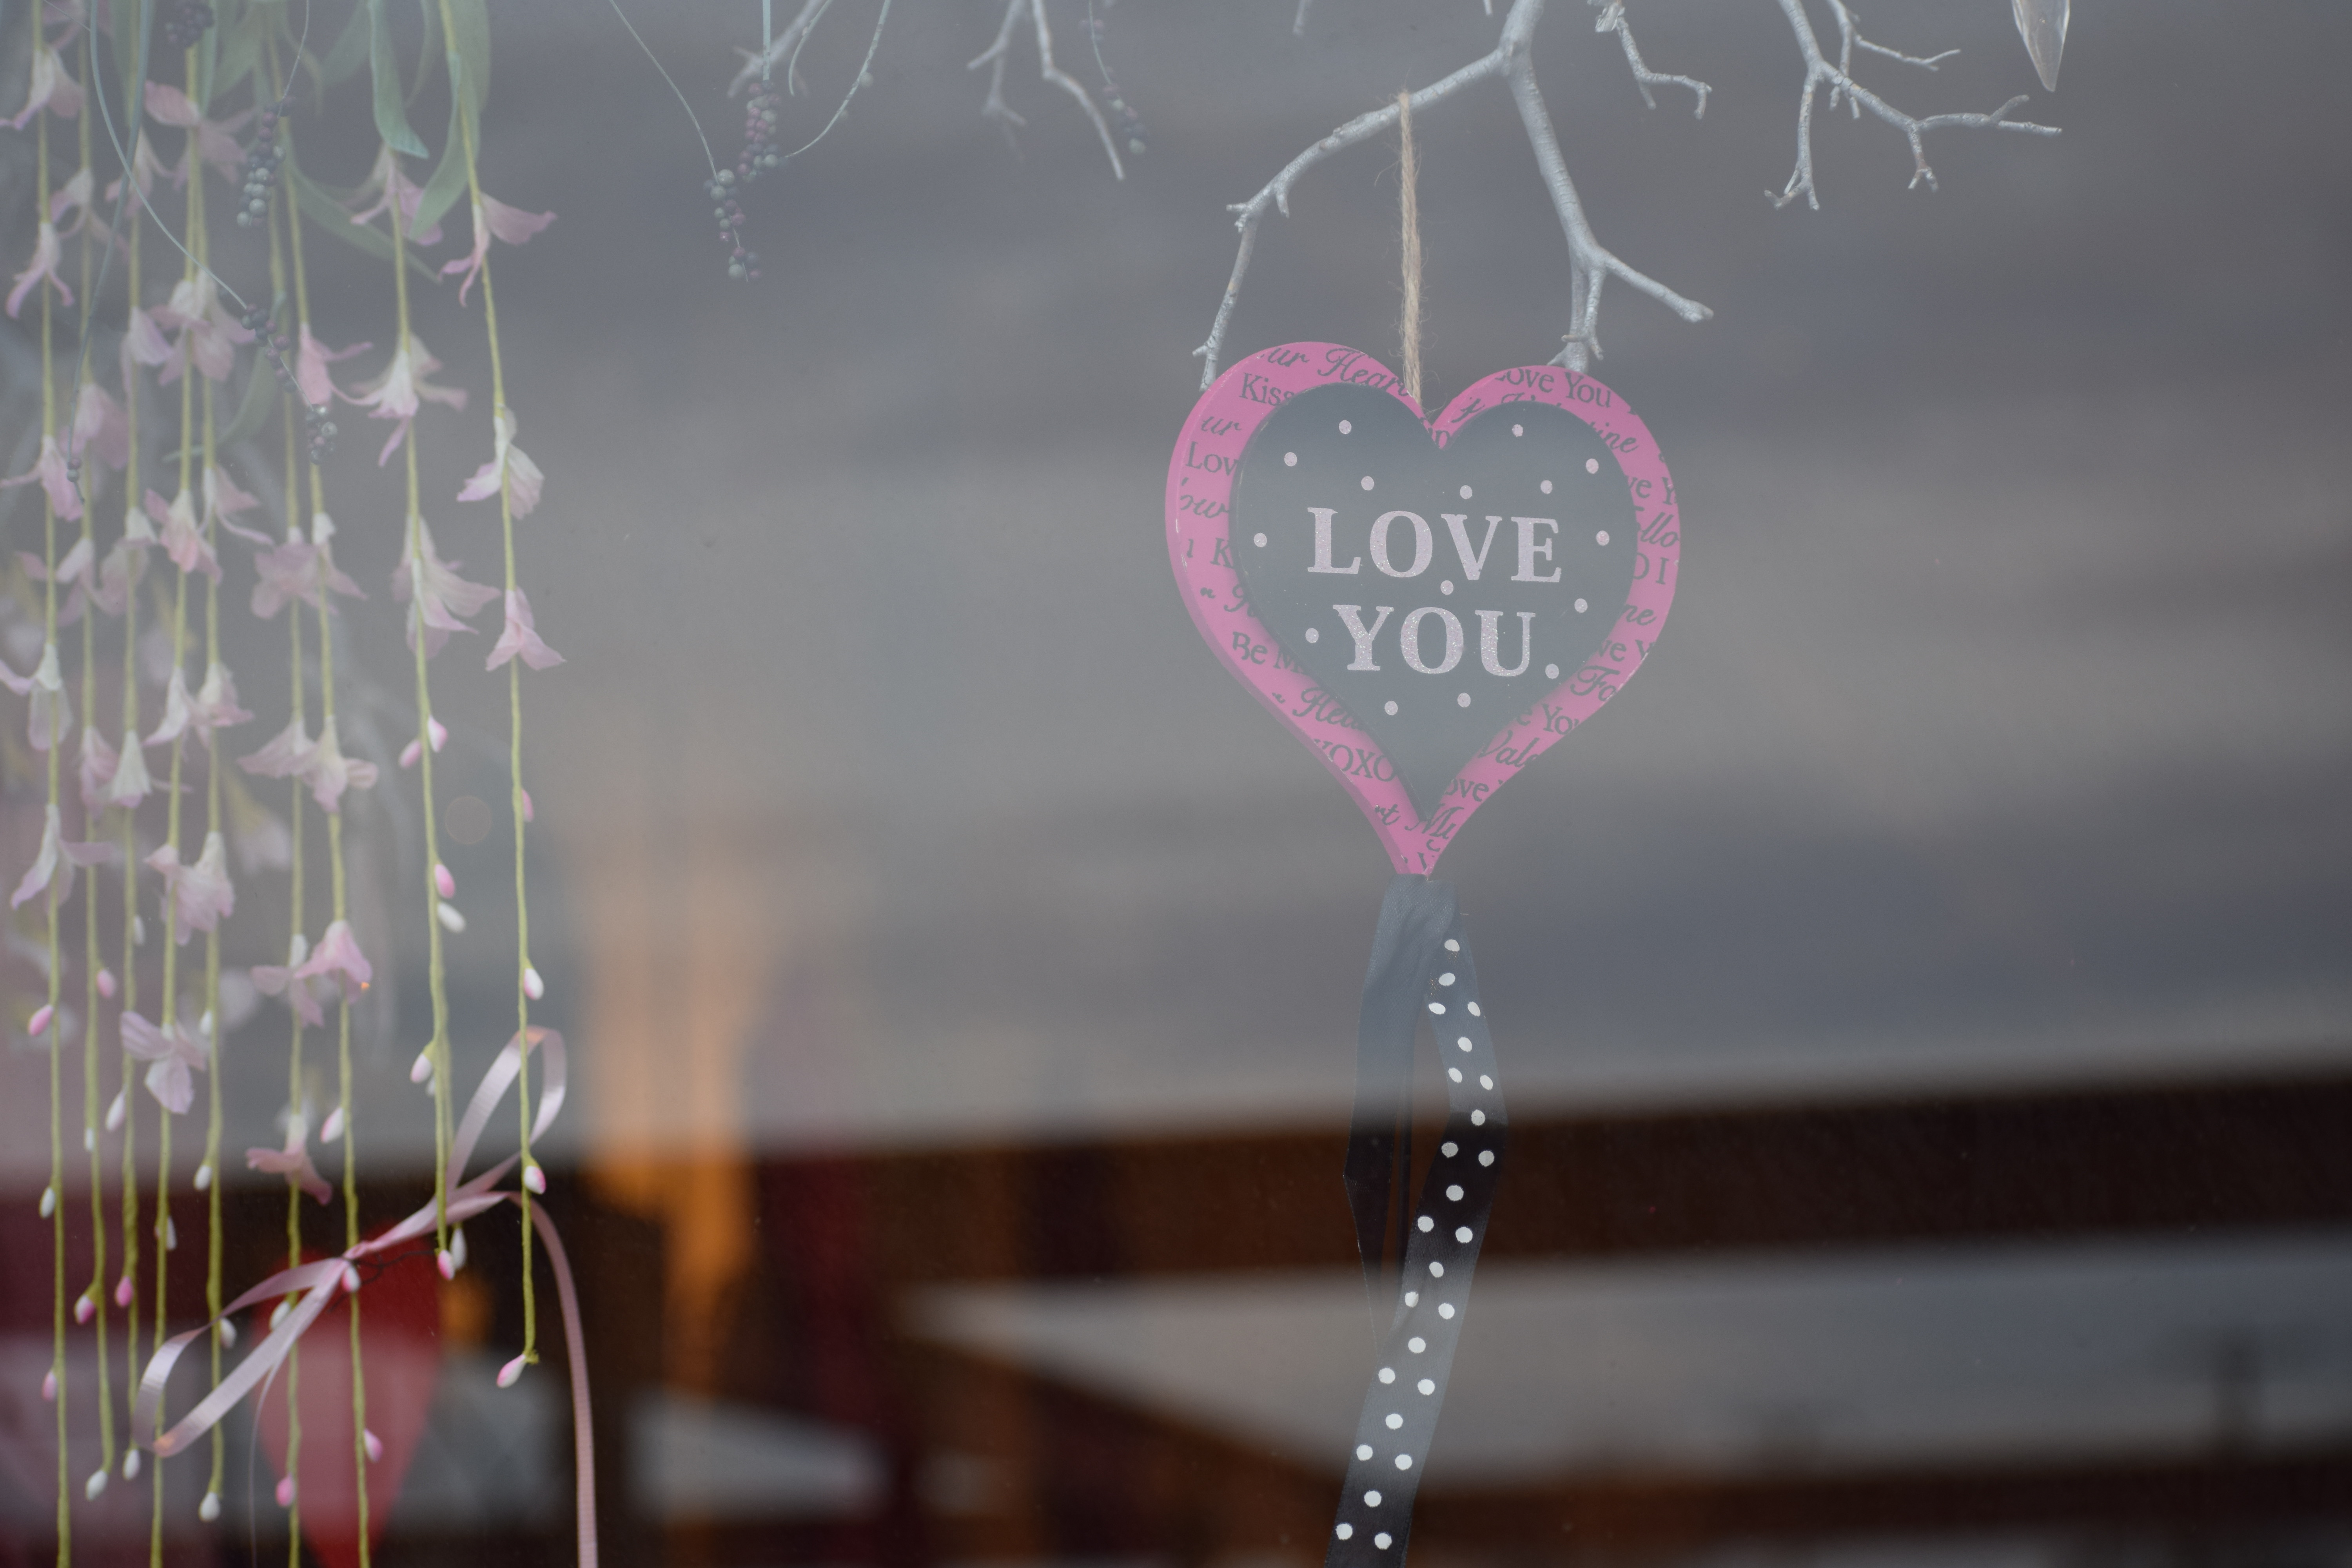 It's the weekend, number 89, Valentine window display in Mystic, CT